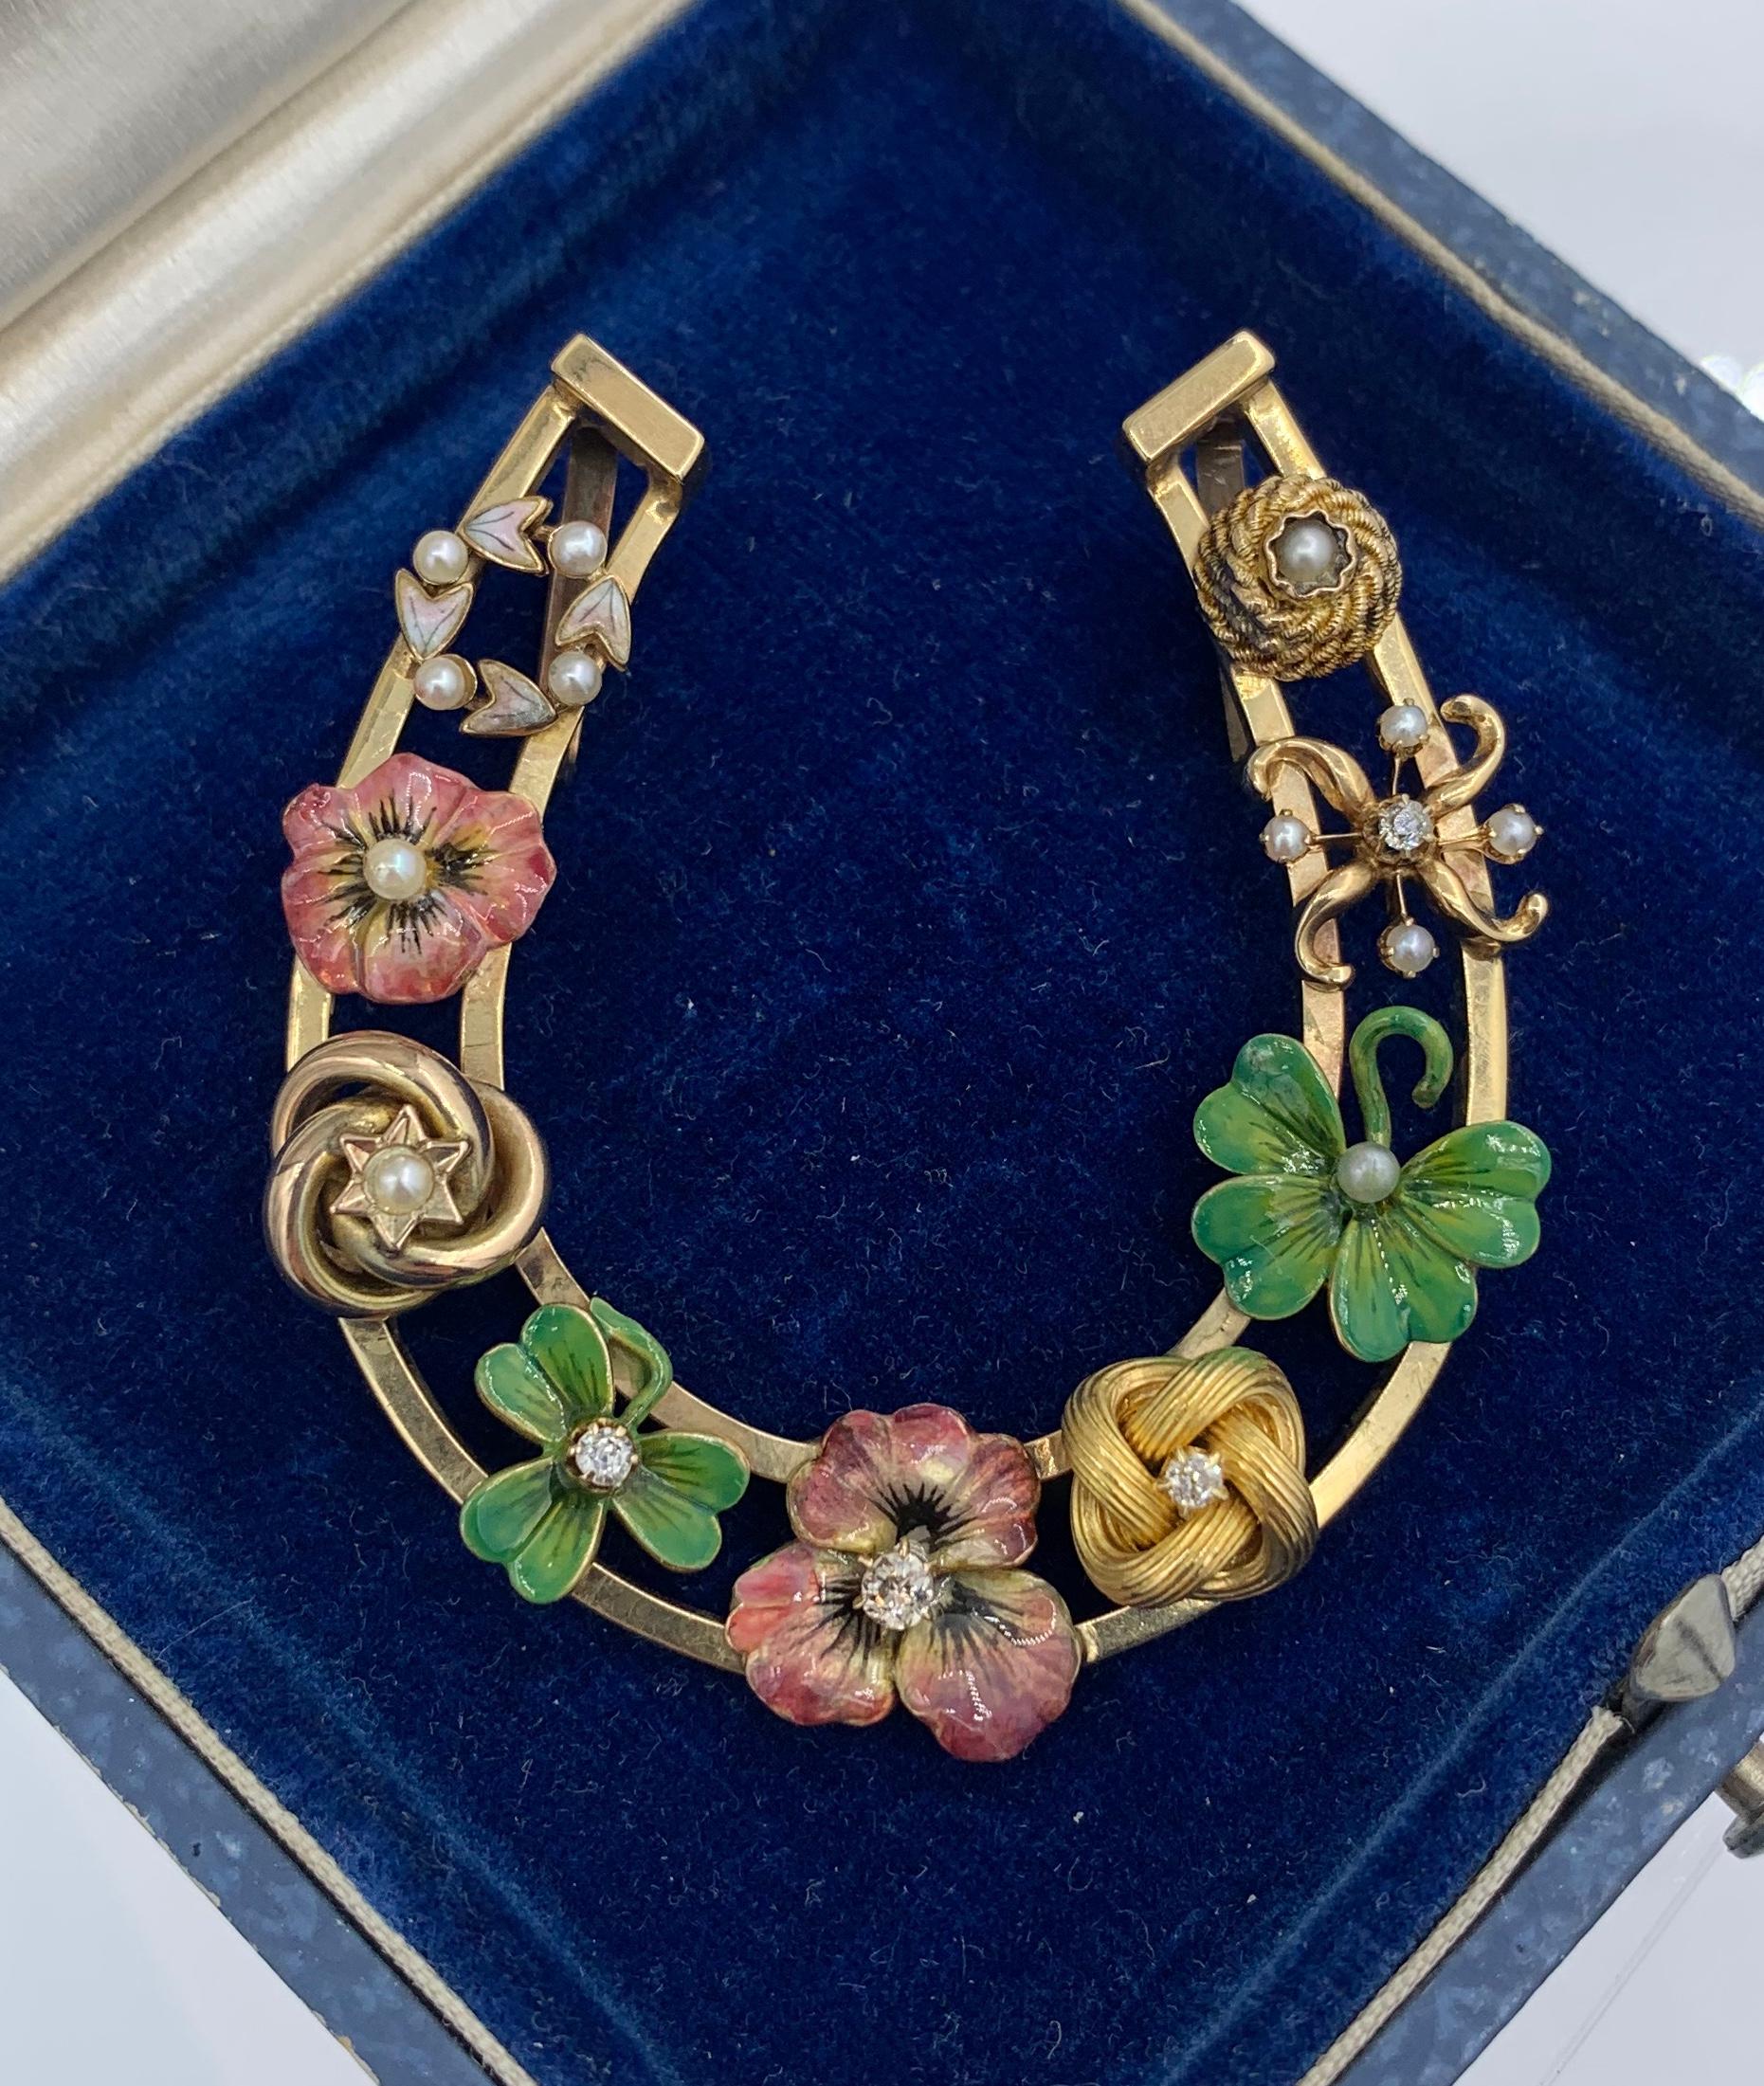 clover flower necklace